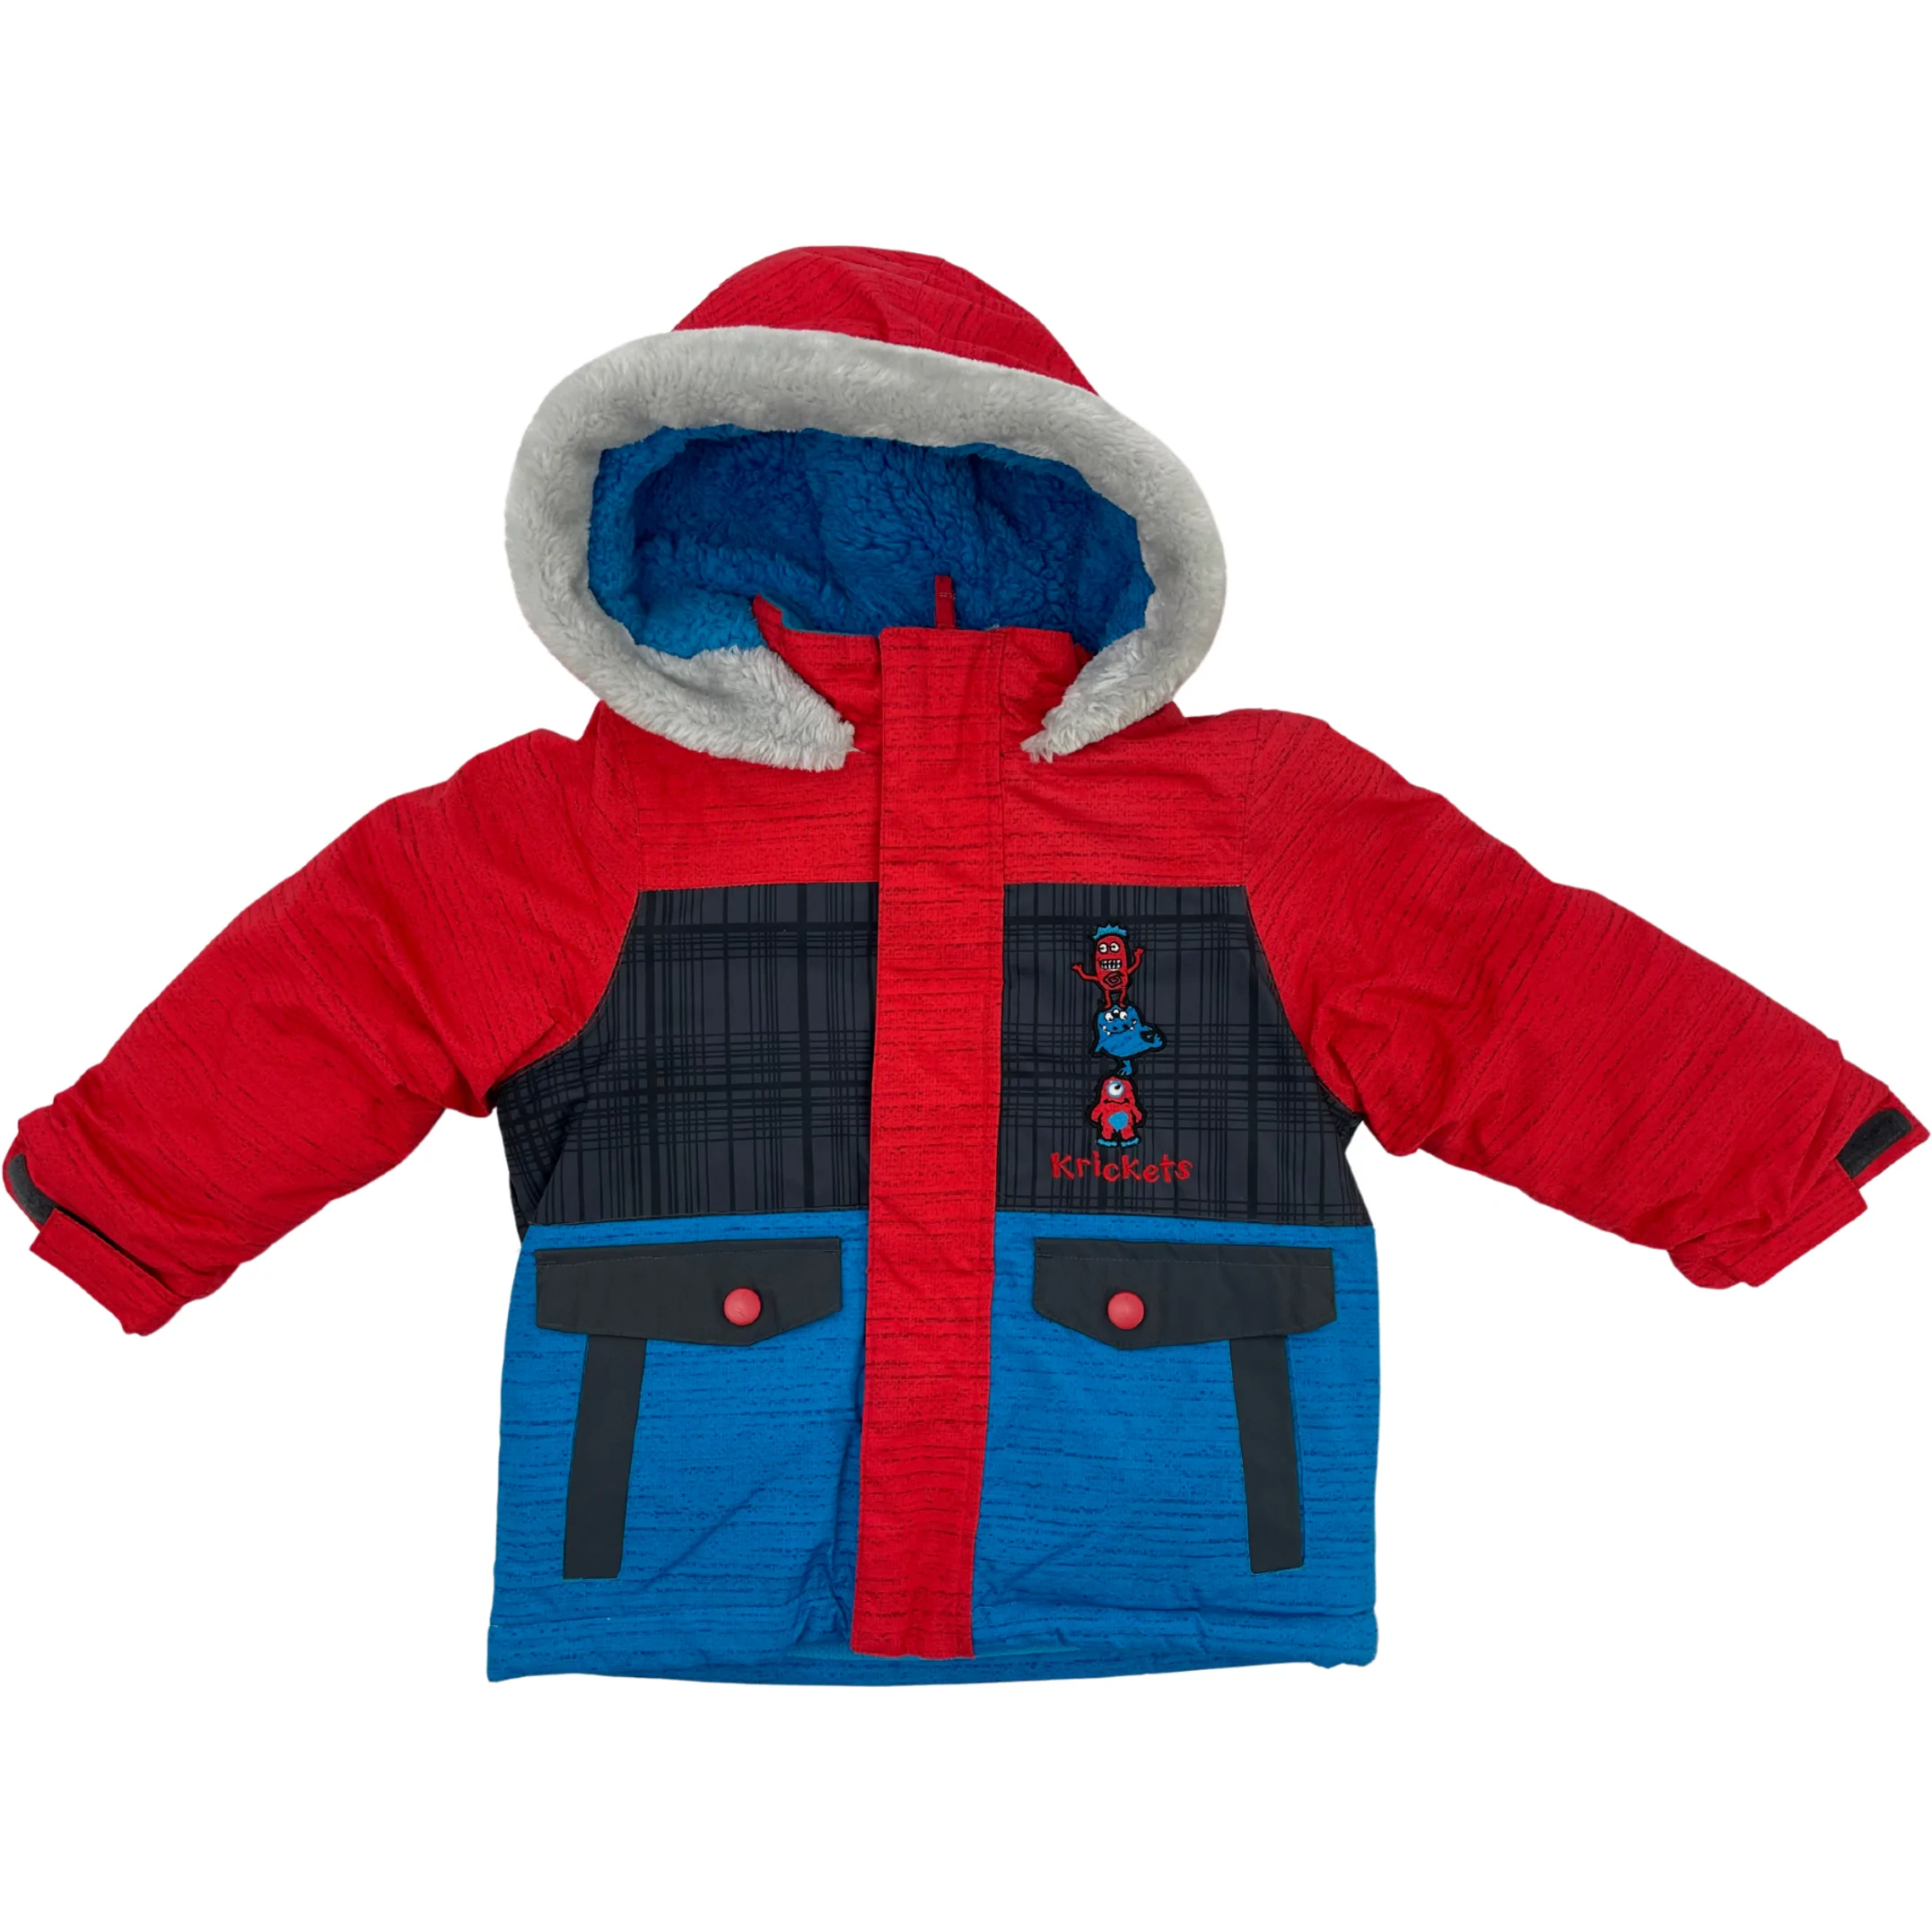 Krickets Toddler's Winter Jacket / Red & Blue / Size 24 Months